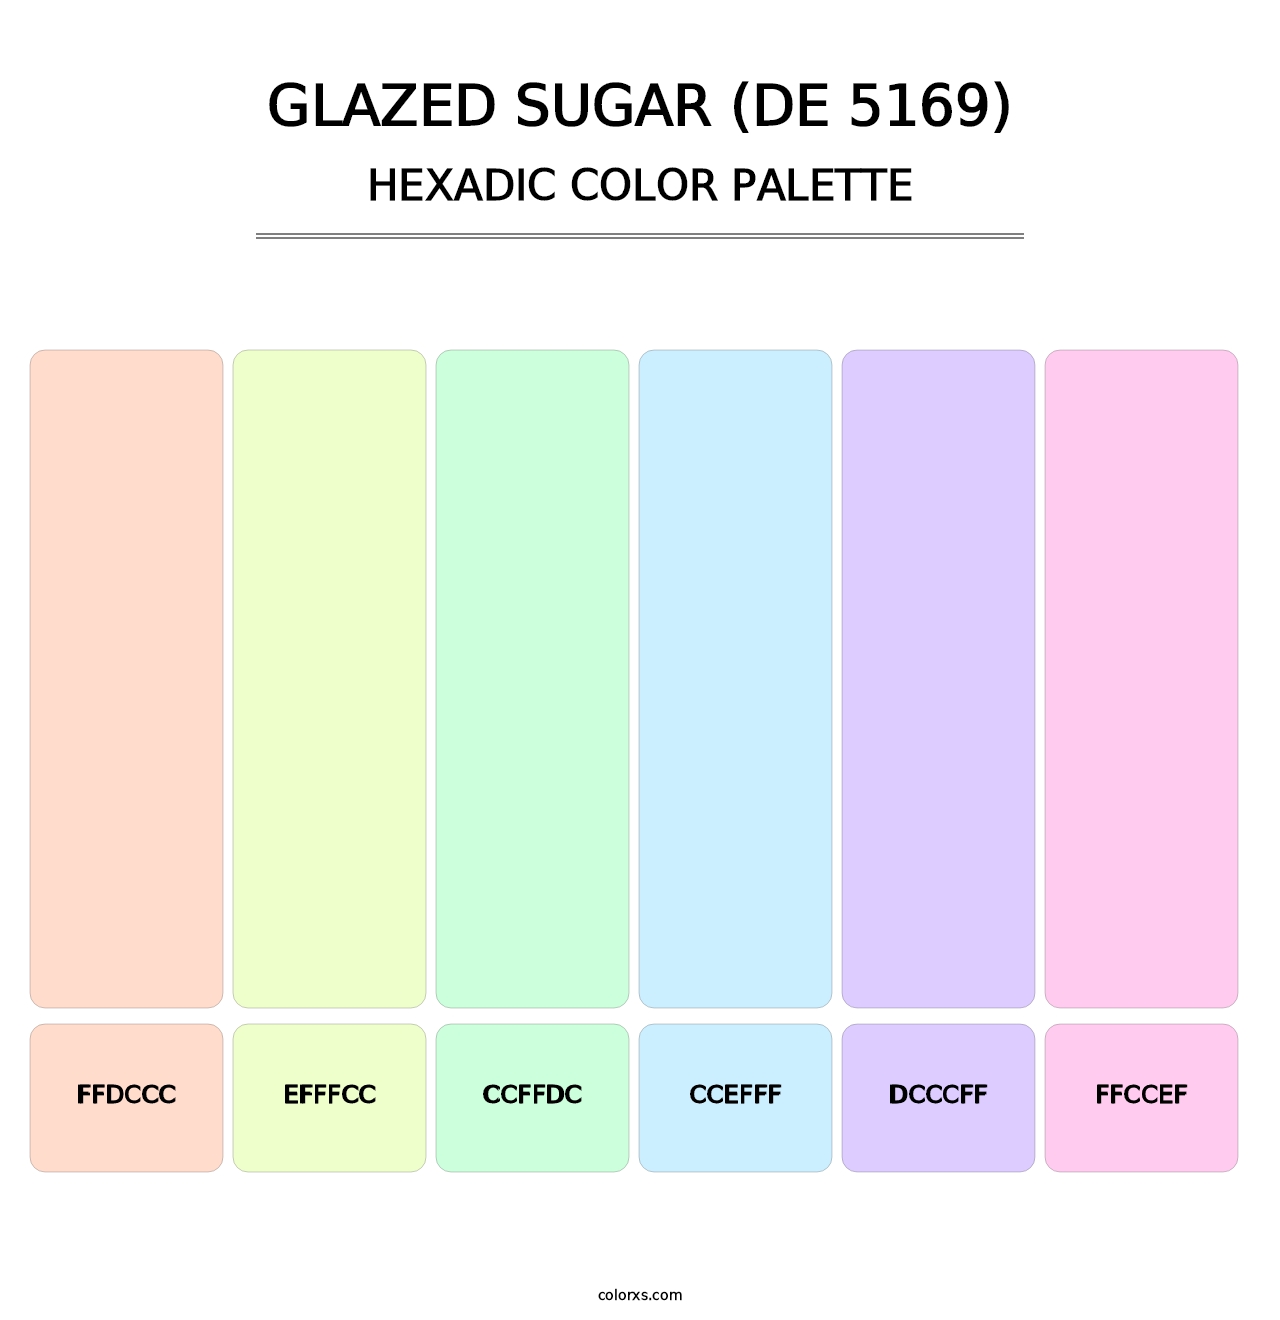 Glazed Sugar (DE 5169) - Hexadic Color Palette